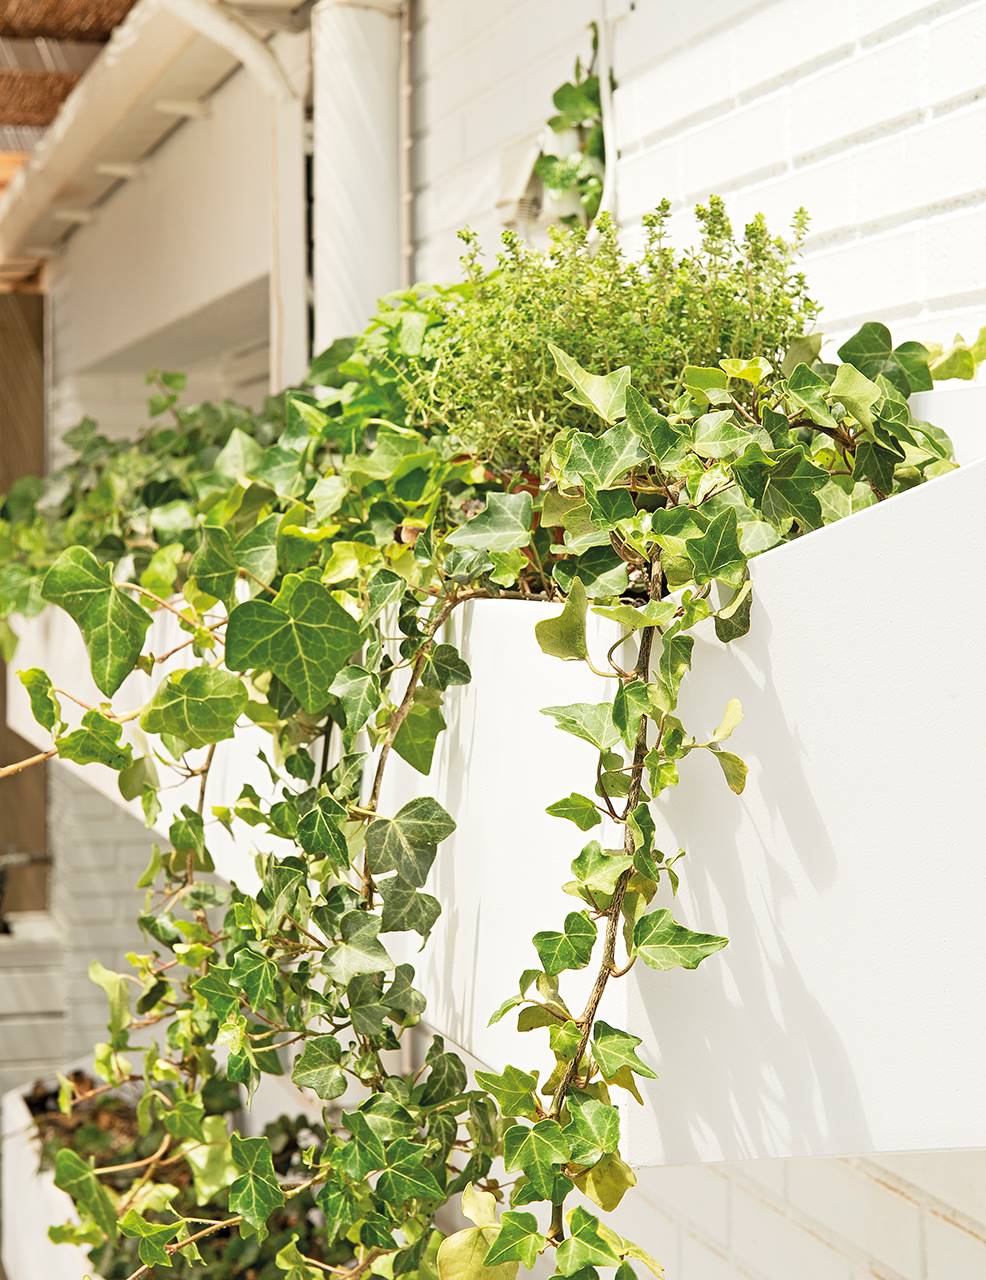 Detail of ivy in hanging planter.